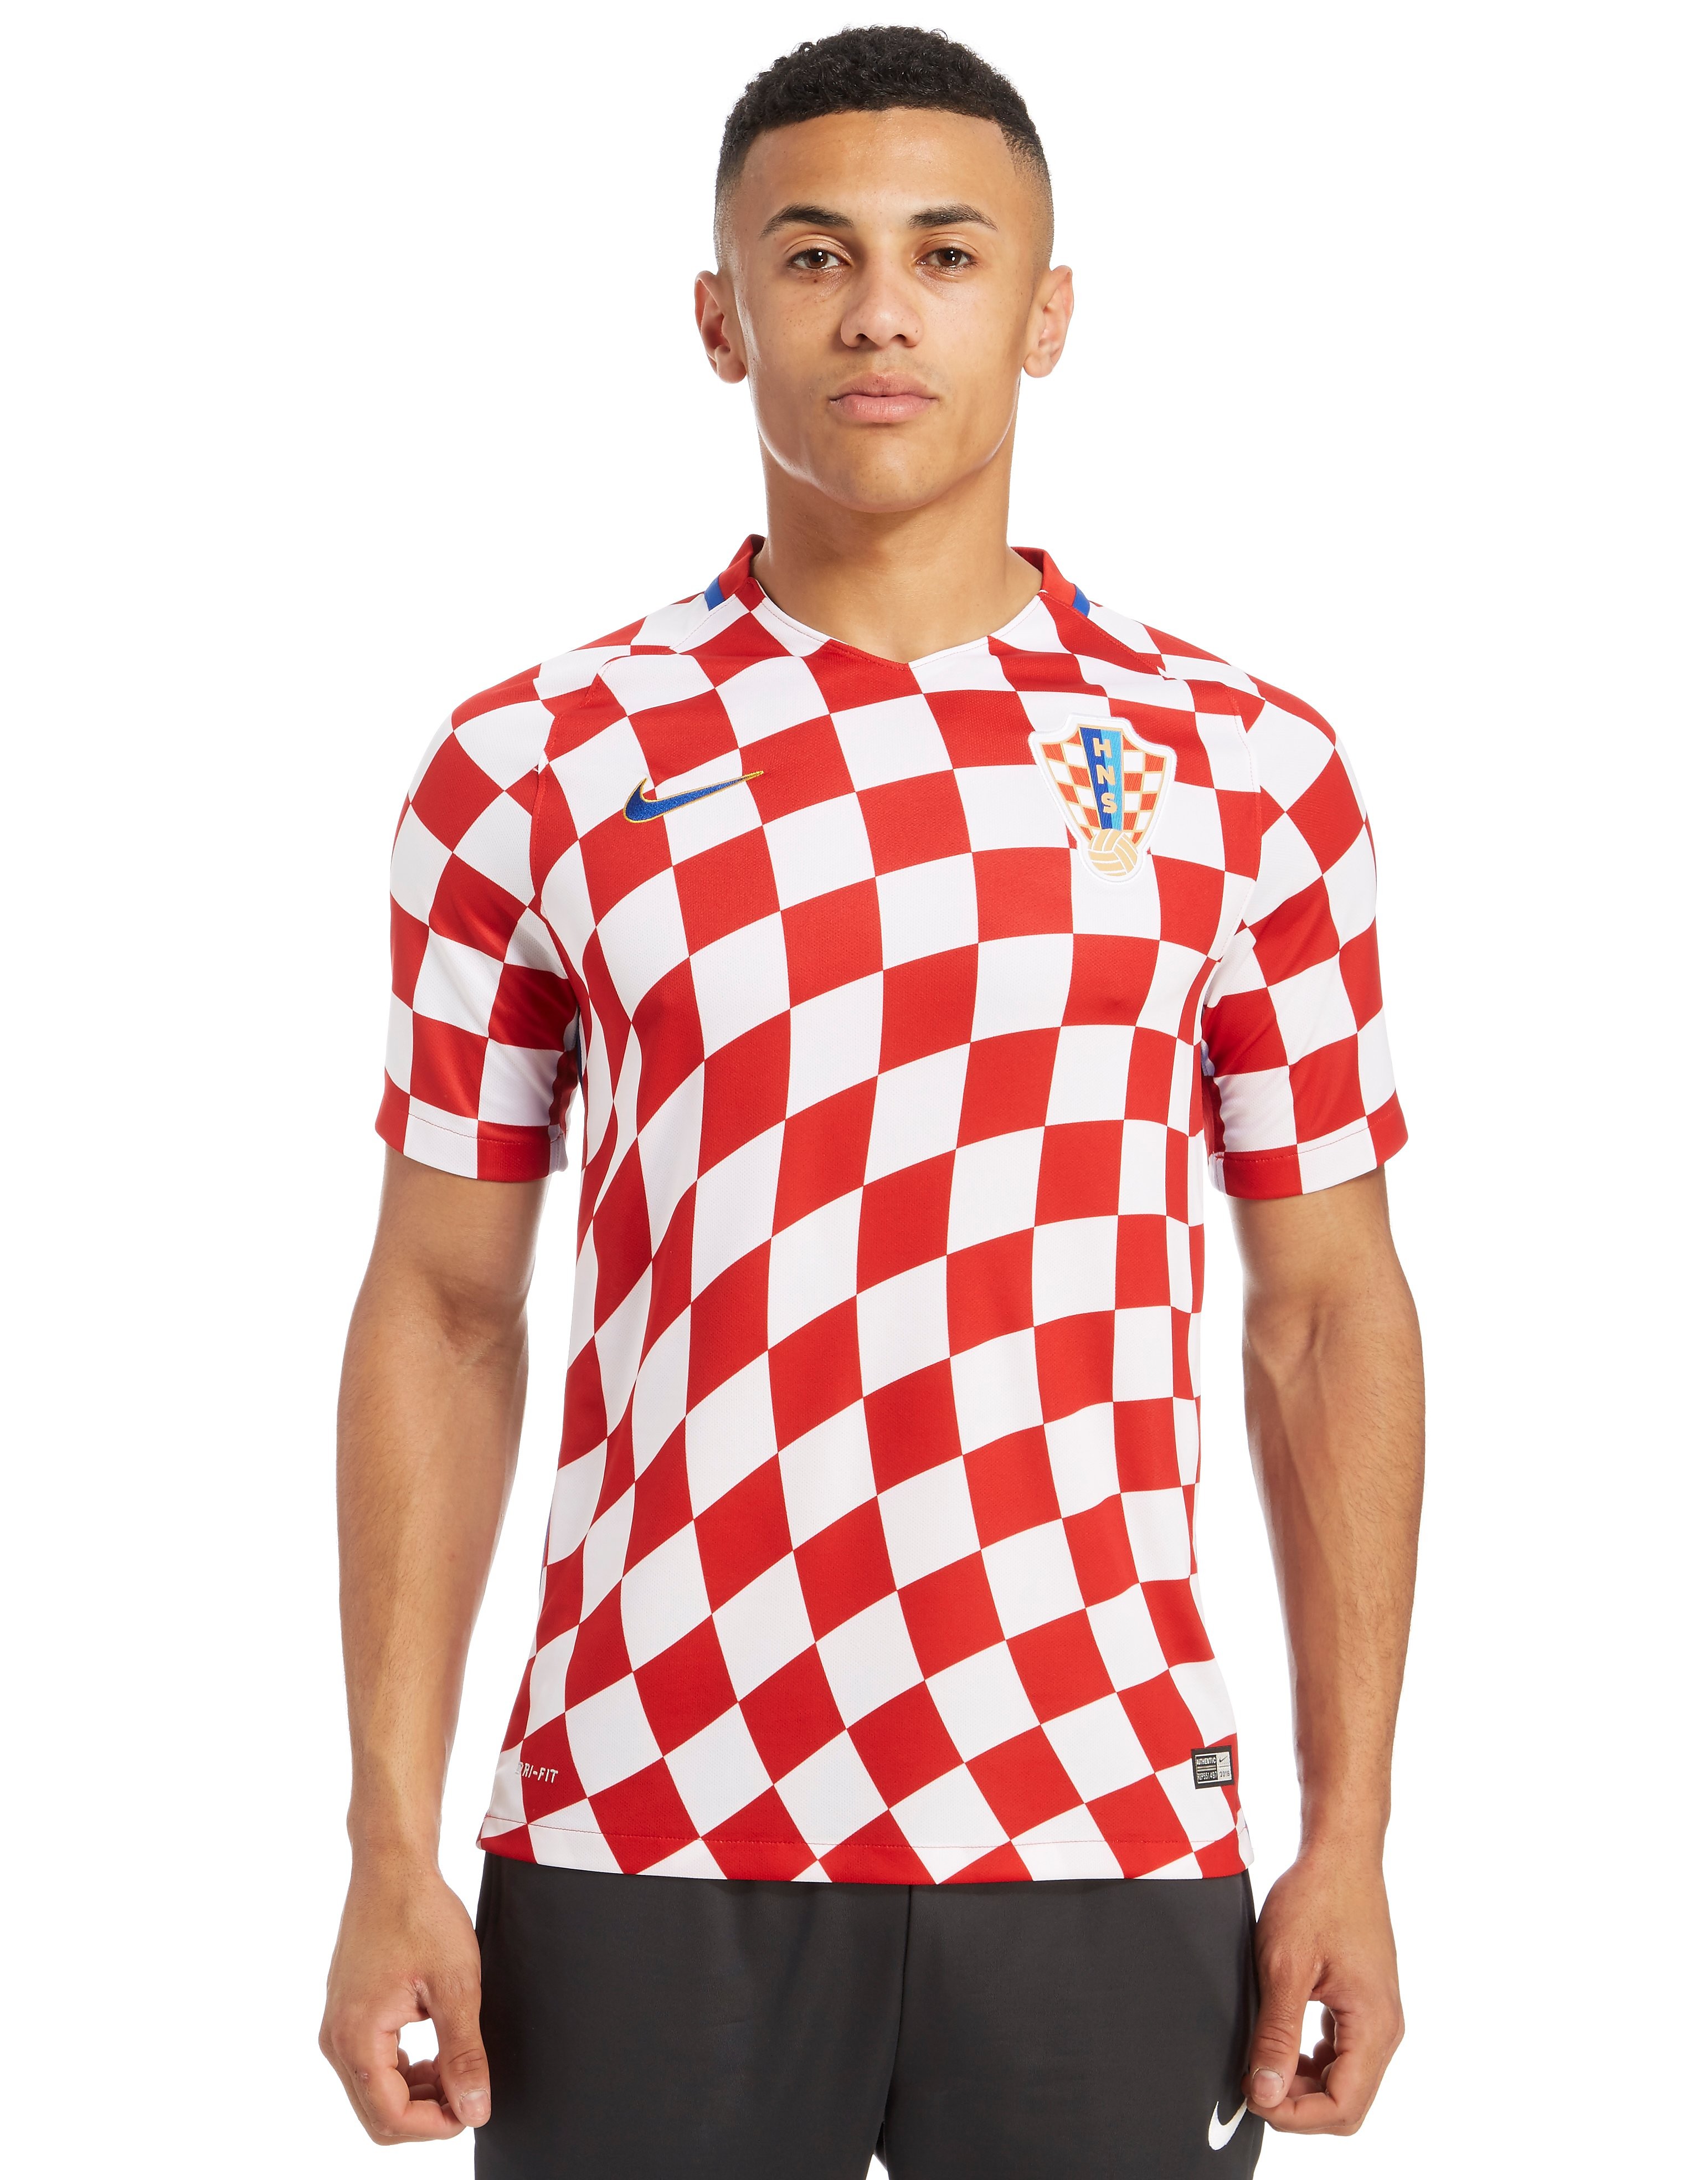 Croatia Euro 2012 Away Kit | New Football Kits Blog